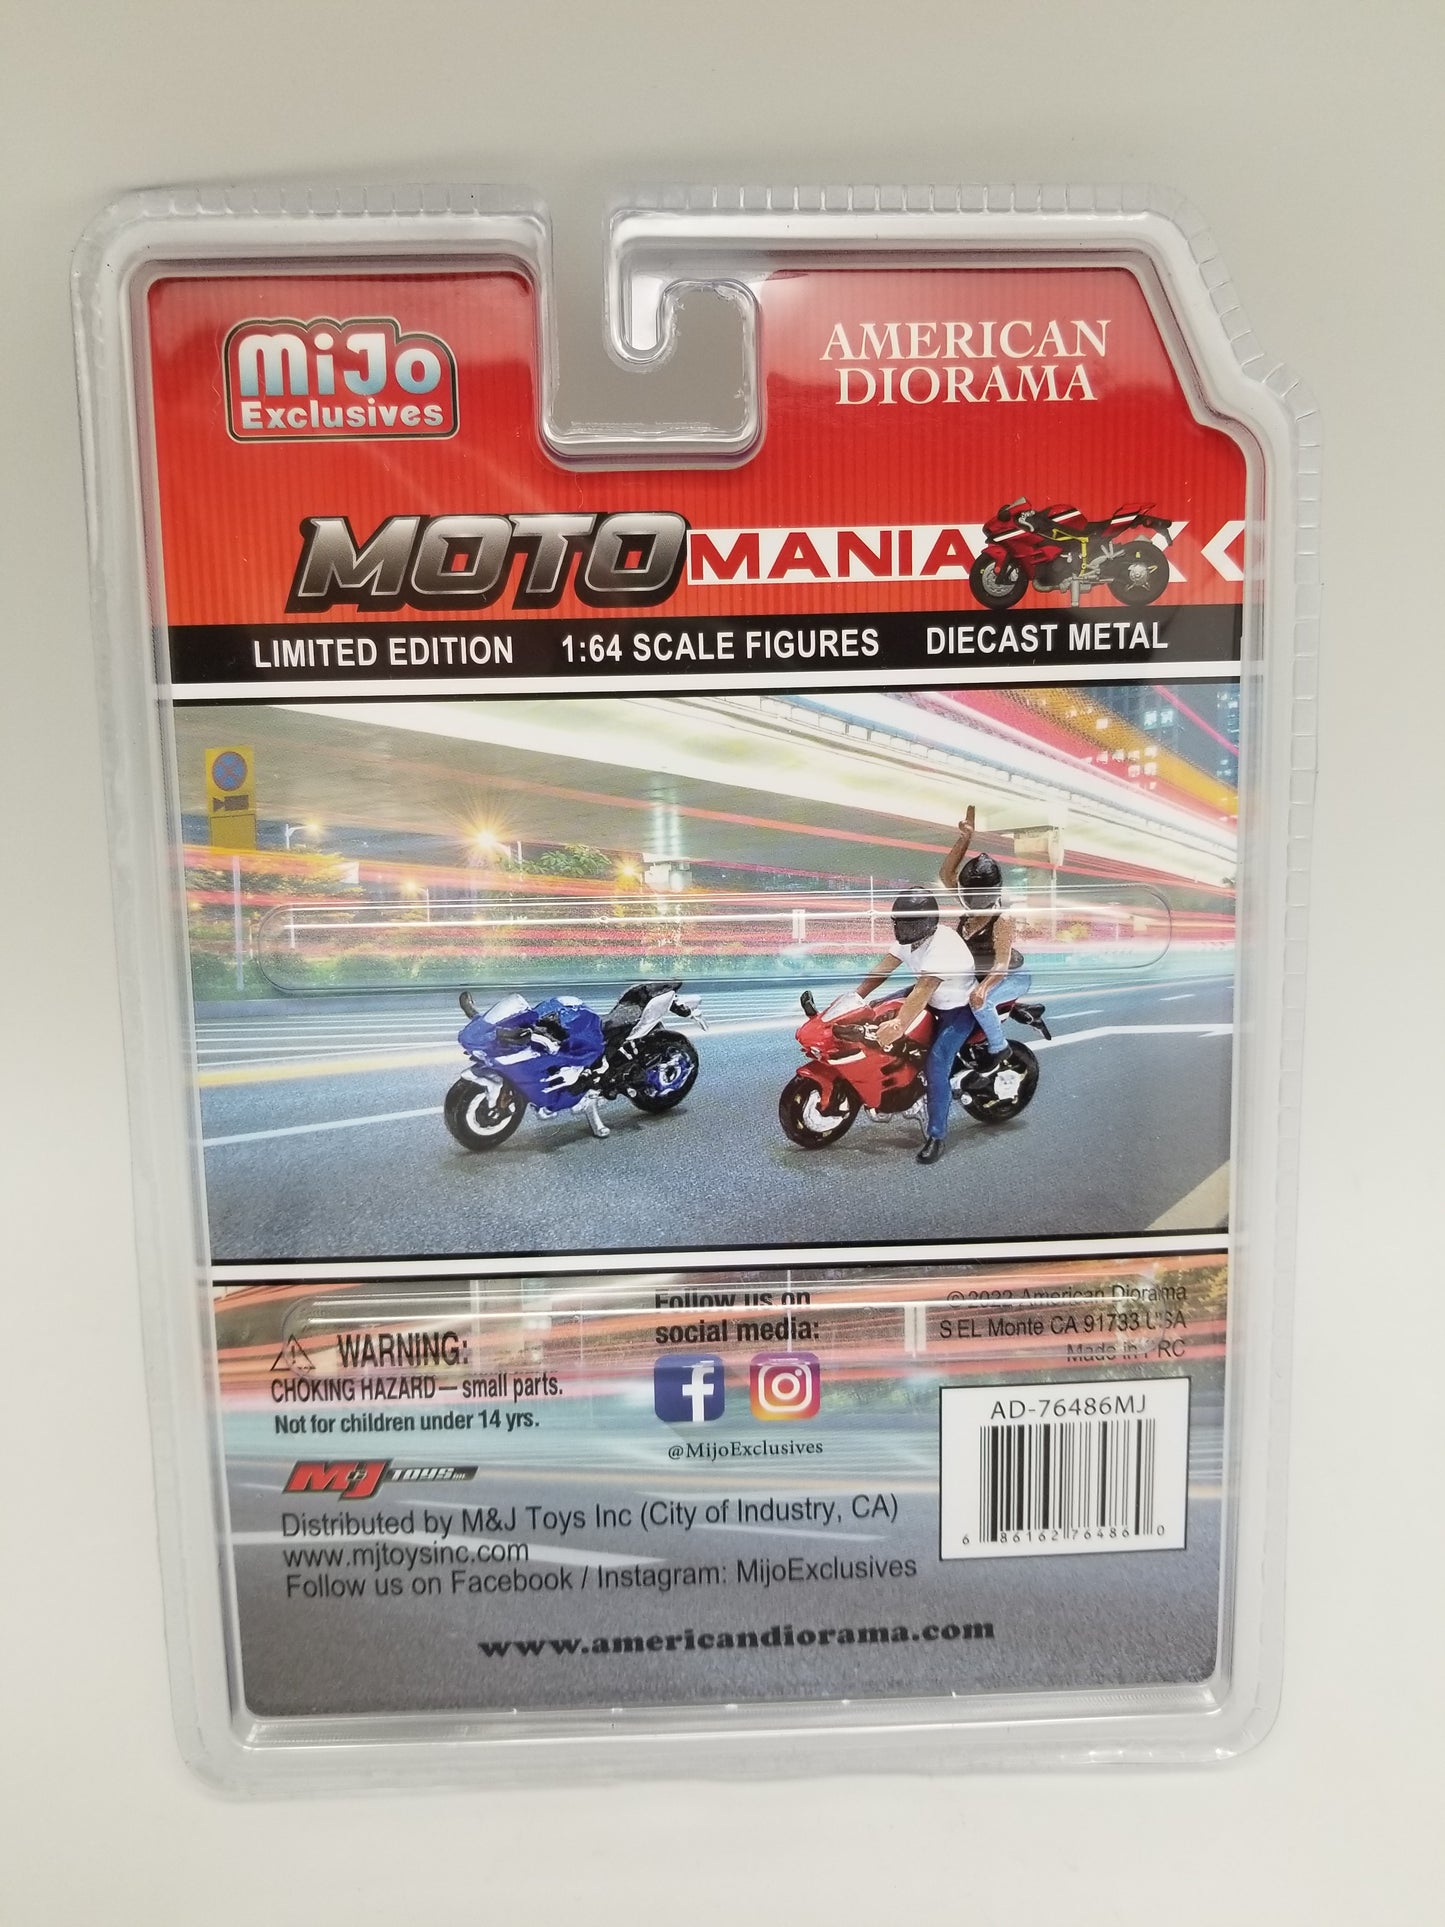 American Diorama MotoMania Motorcycles and Riders